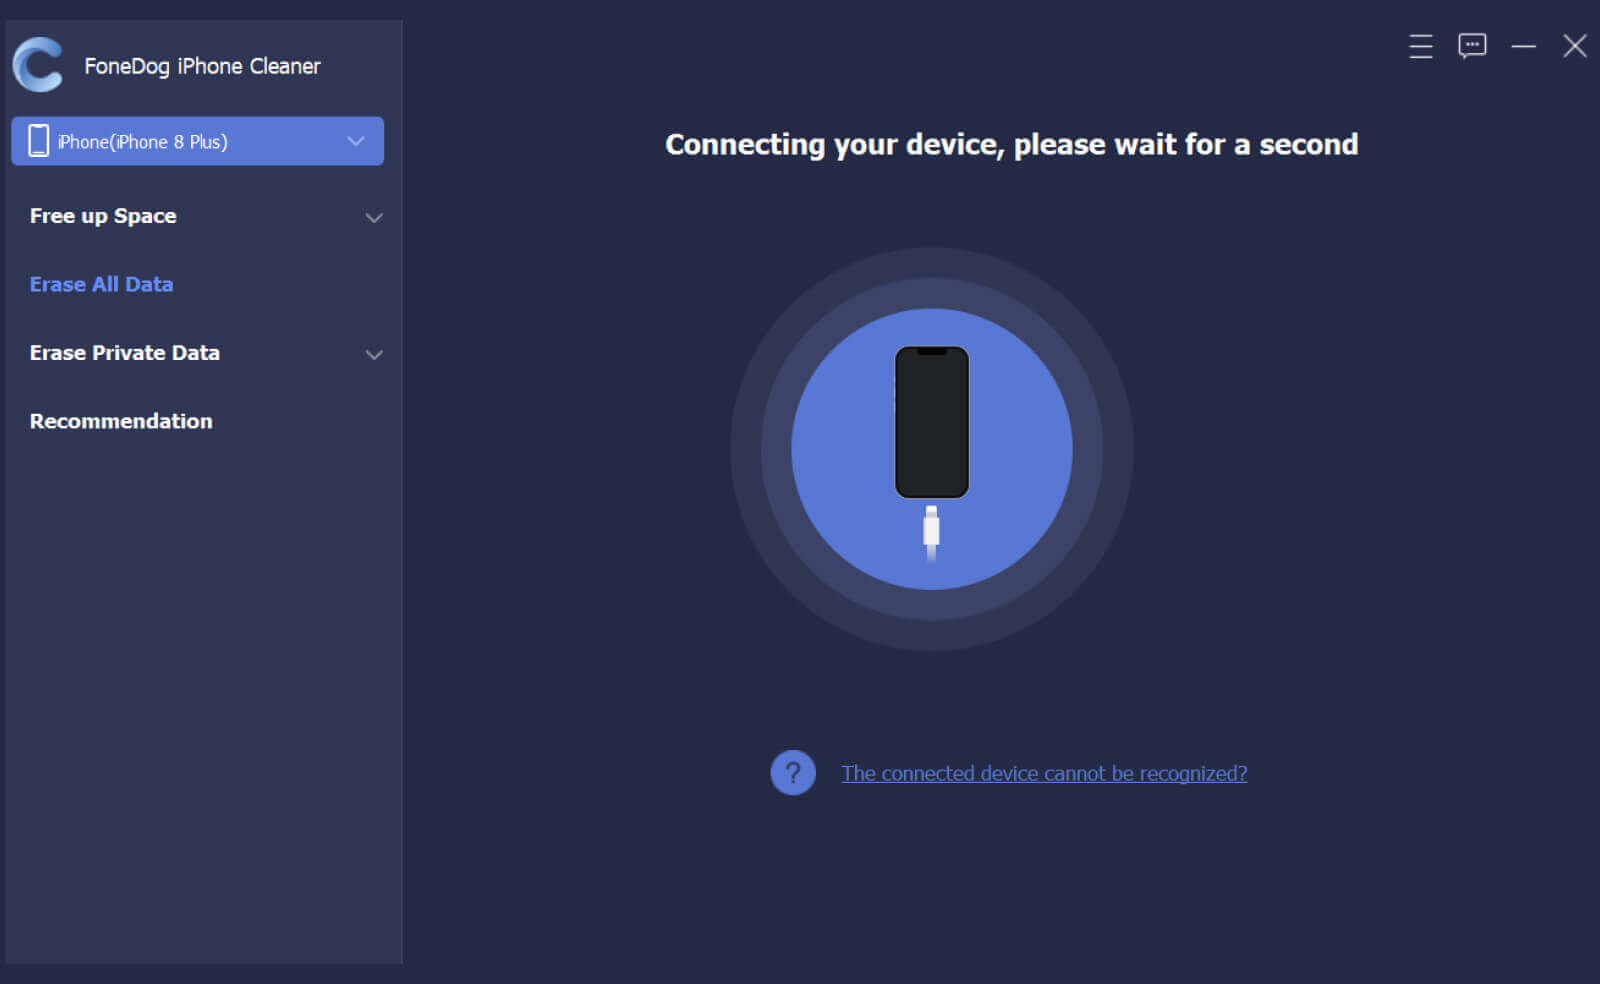 قم بتشغيل FoneDog iPhone Cleaner والثقة به لحذف محفوظات رسائل Viber